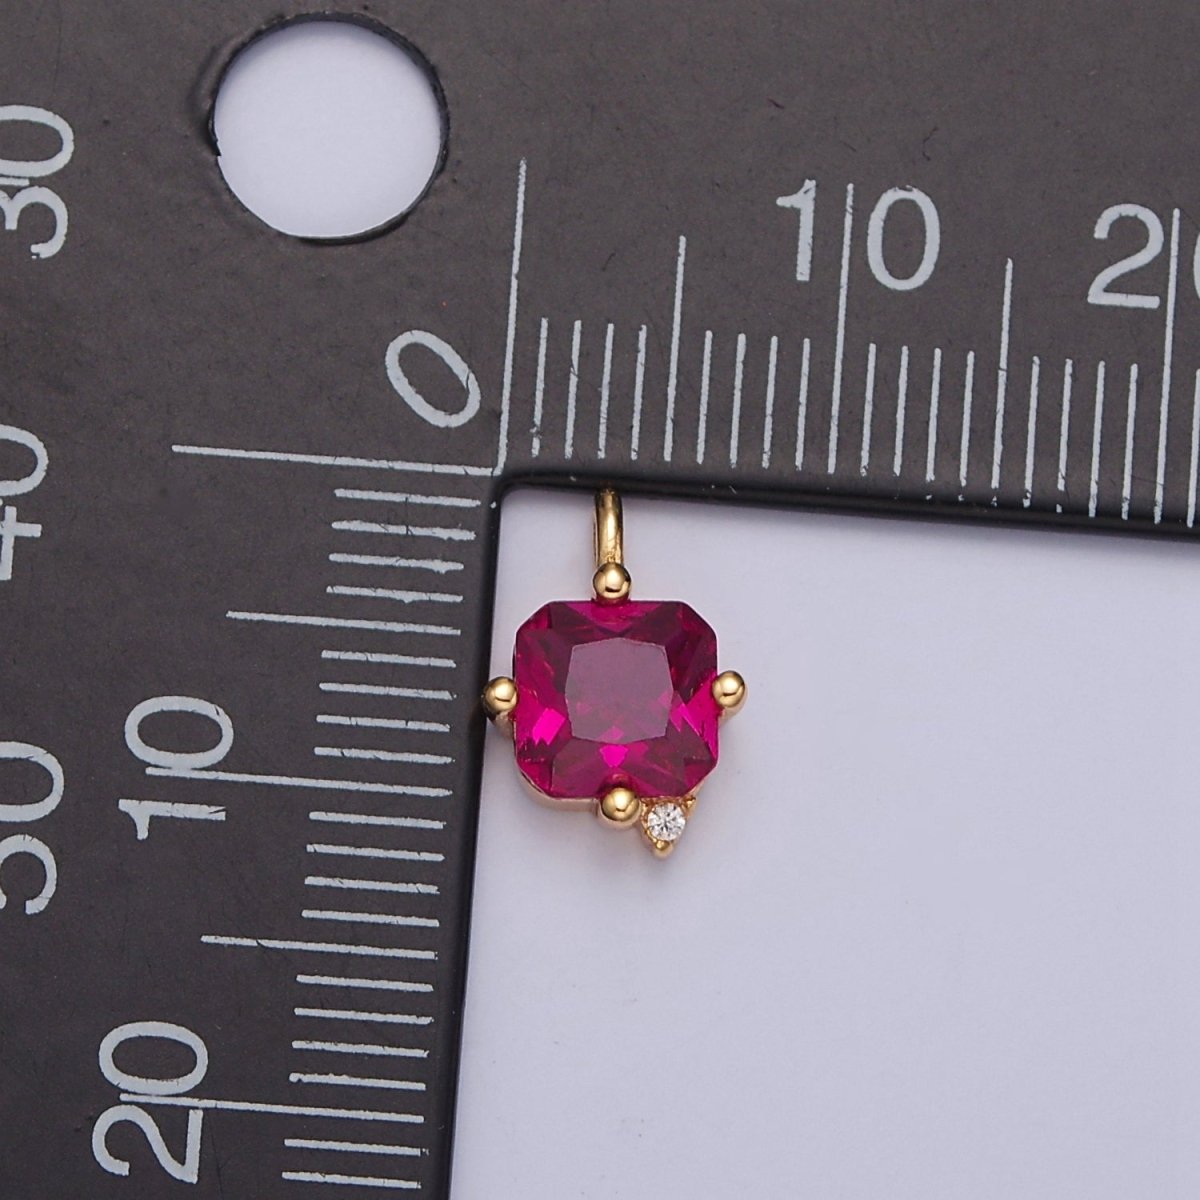 Mini Hot Pink Charm CZ Jewel necklace Square pendant, Gold jewelry J-600 - DLUXCA